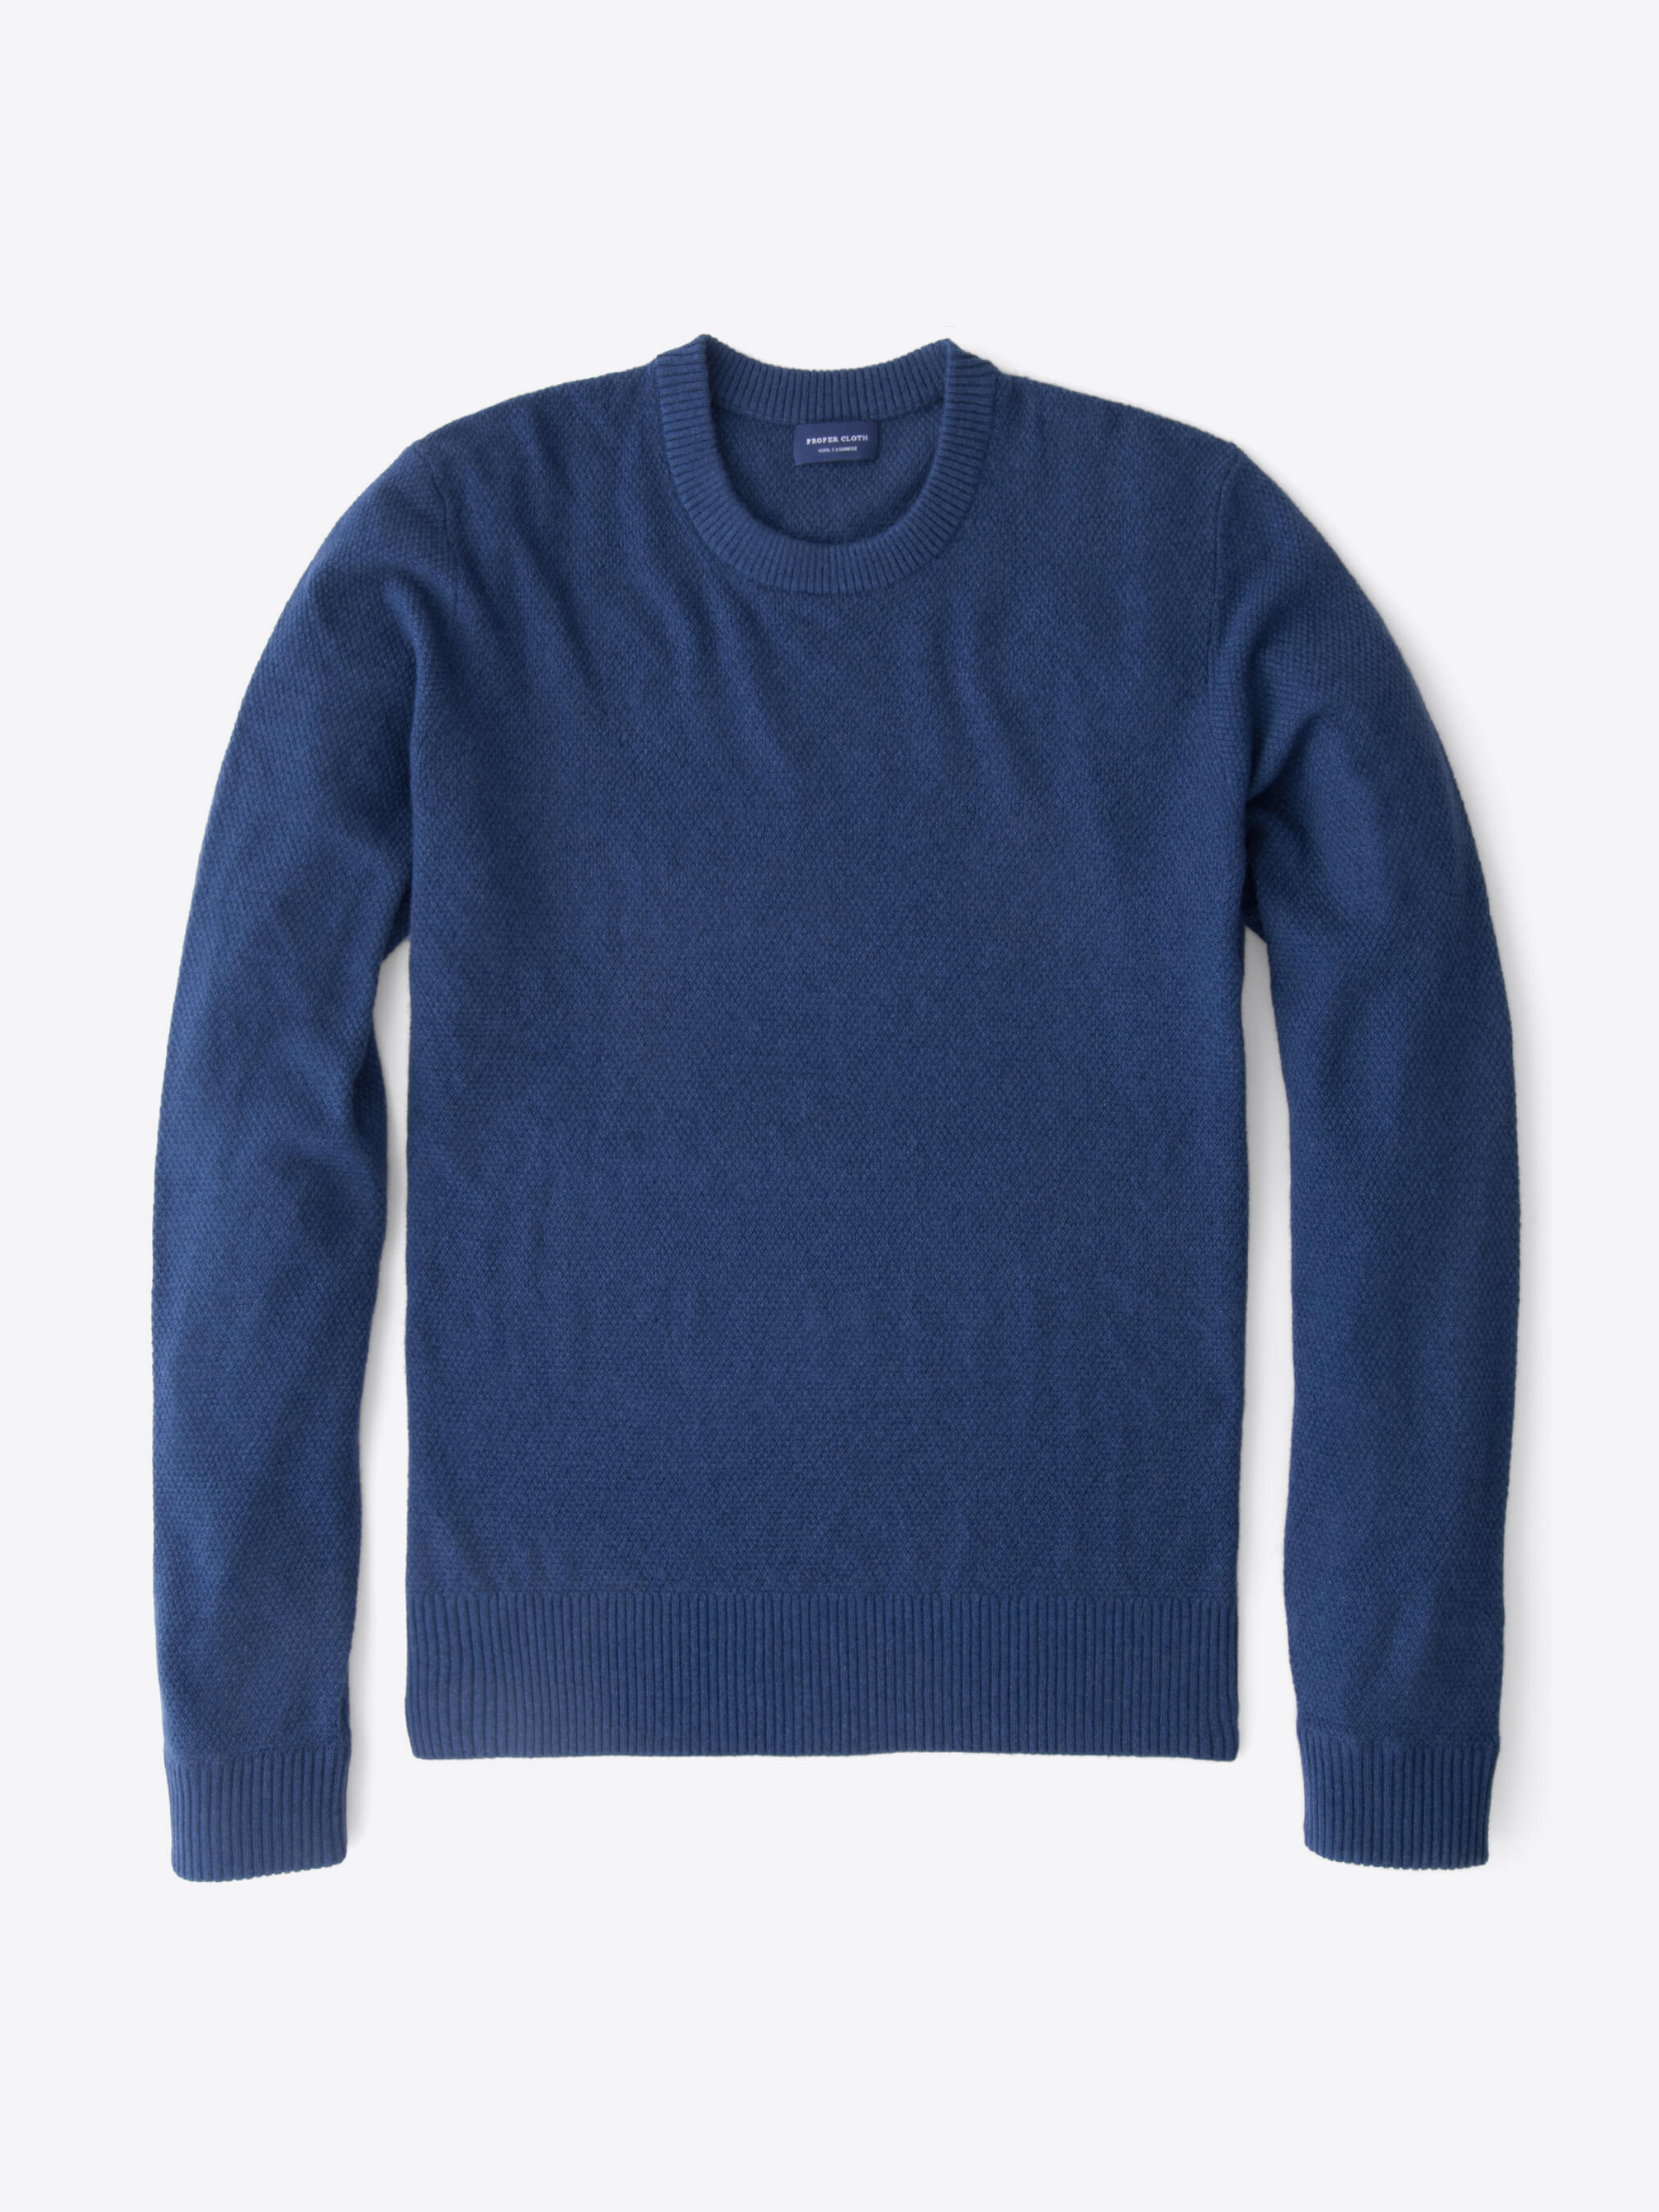 Zoom Image of Ocean Blue Cobble Stitch Cashmere Crewneck Sweater